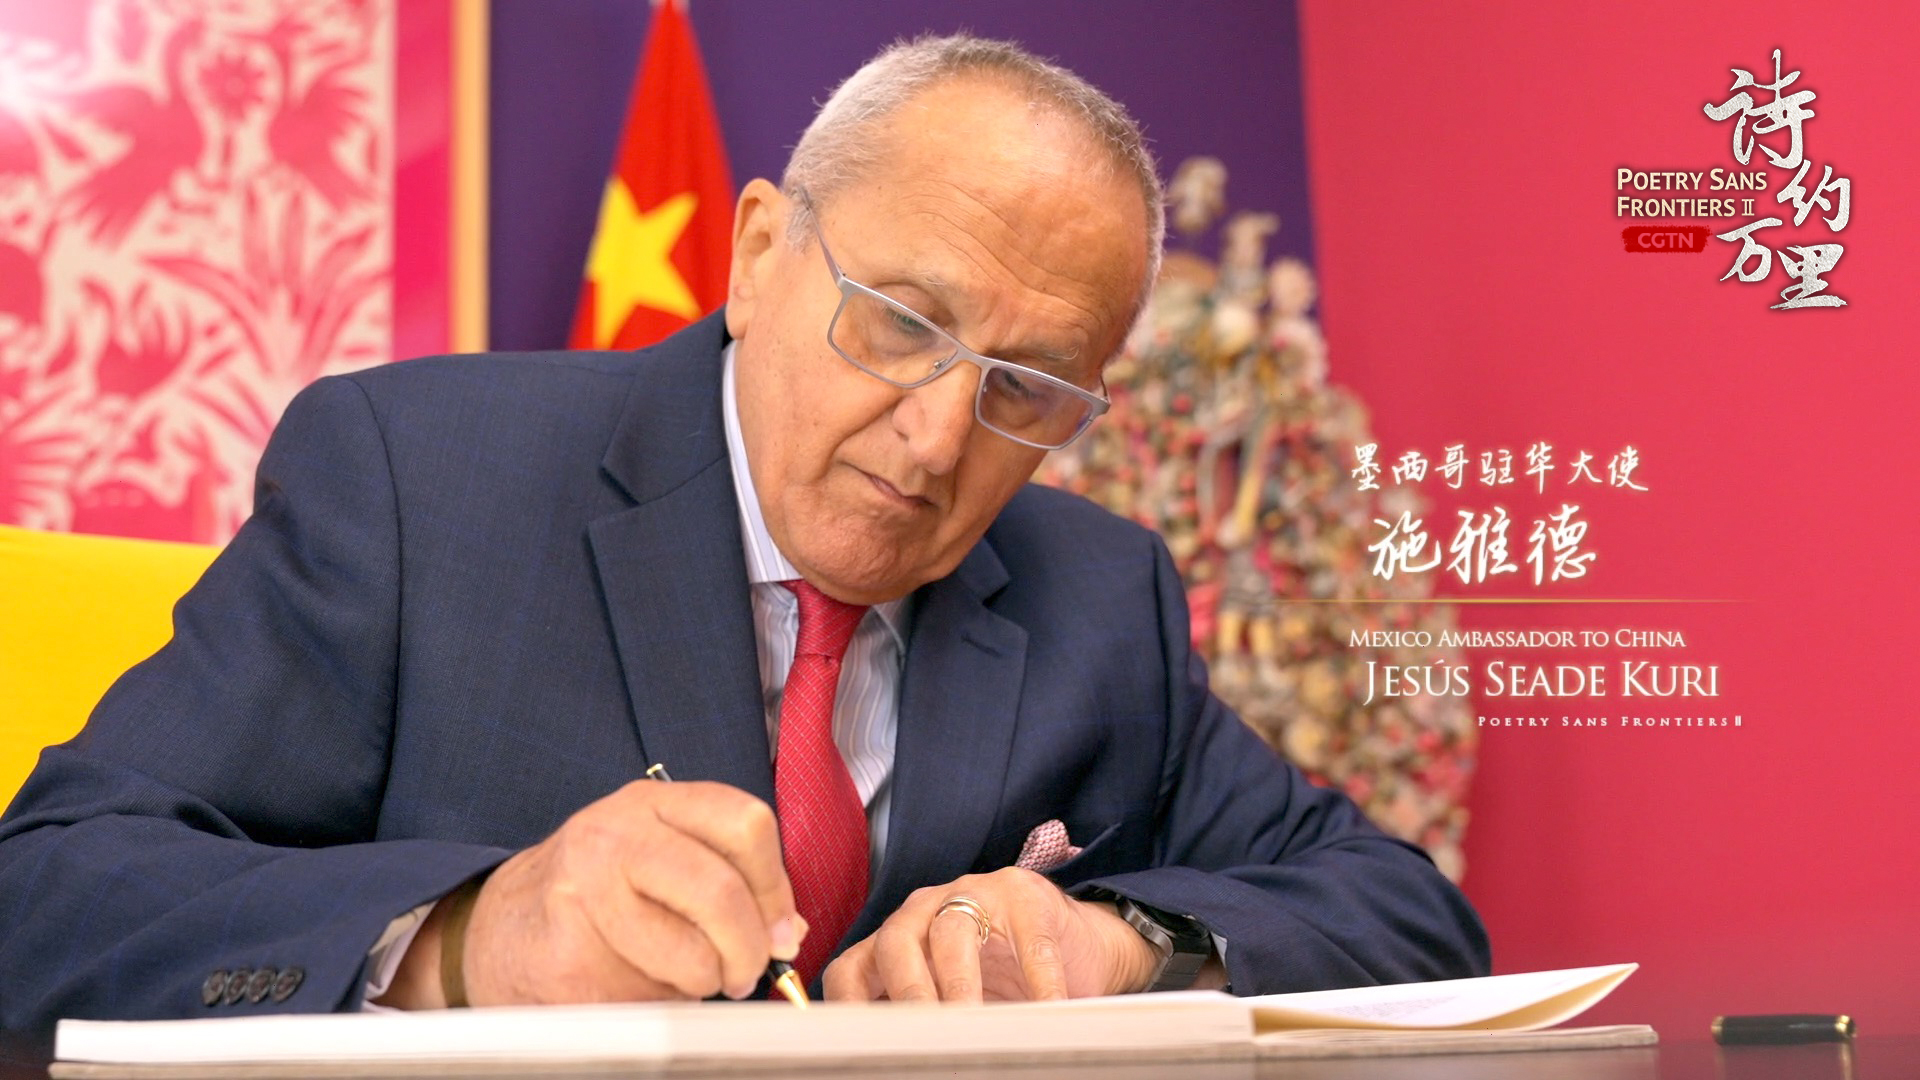 Mexico's ambassador to China shares poem about Chinese poet Li Bai